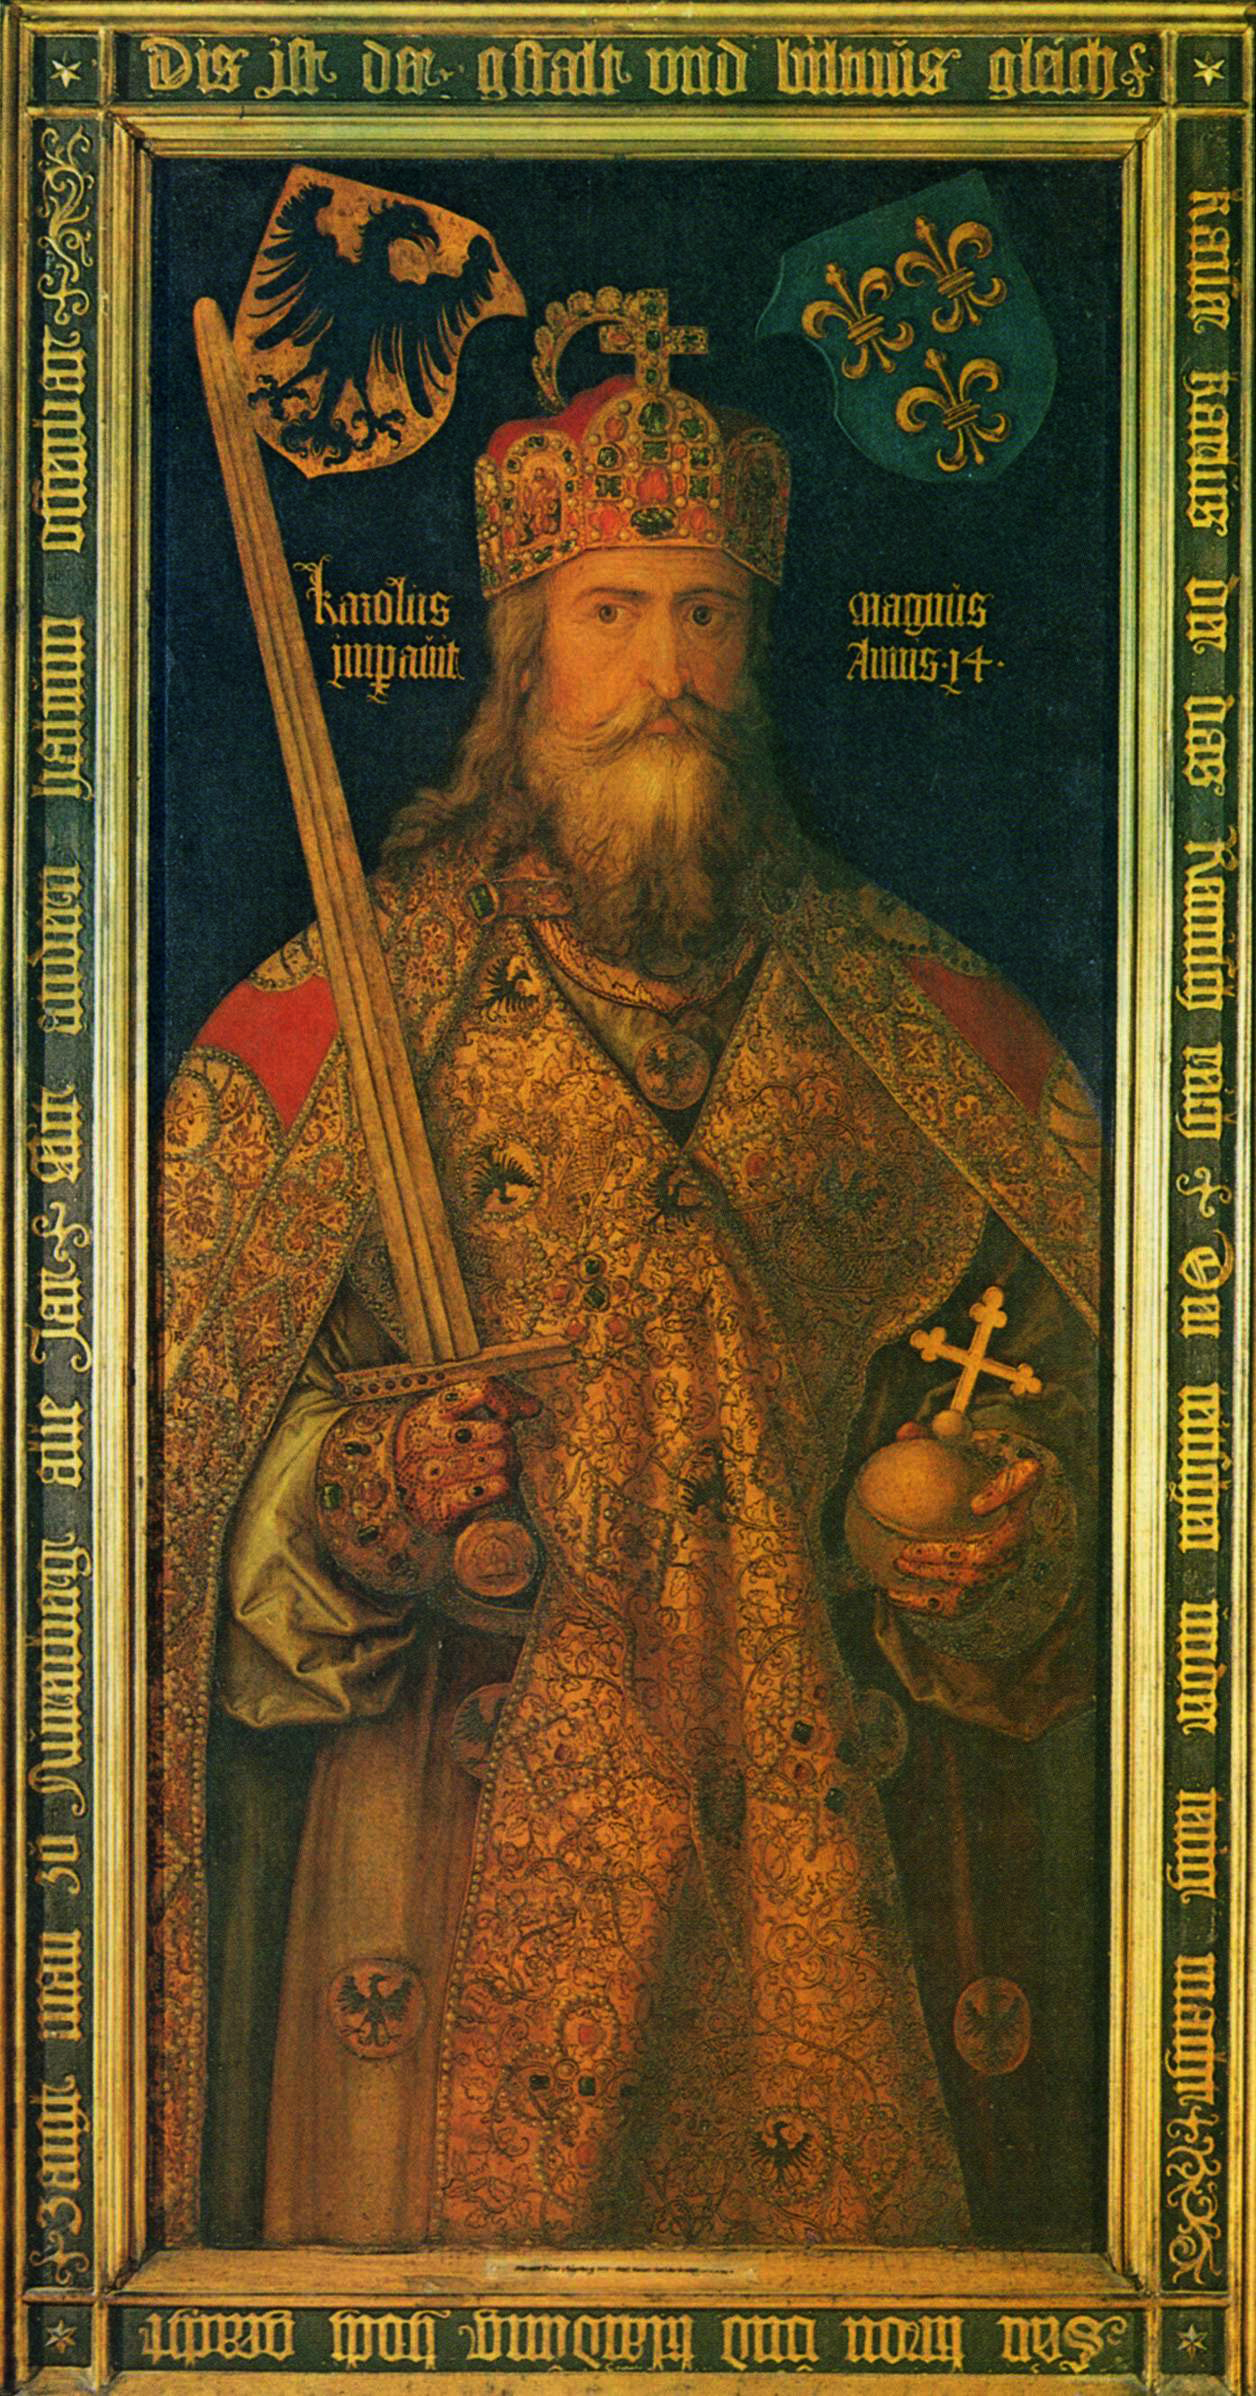 https://upload.wikimedia.org/wikipedia/commons/b/b3/Albrecht_D%C3%BCrer_-_Emperor_Charlemagne.jpg